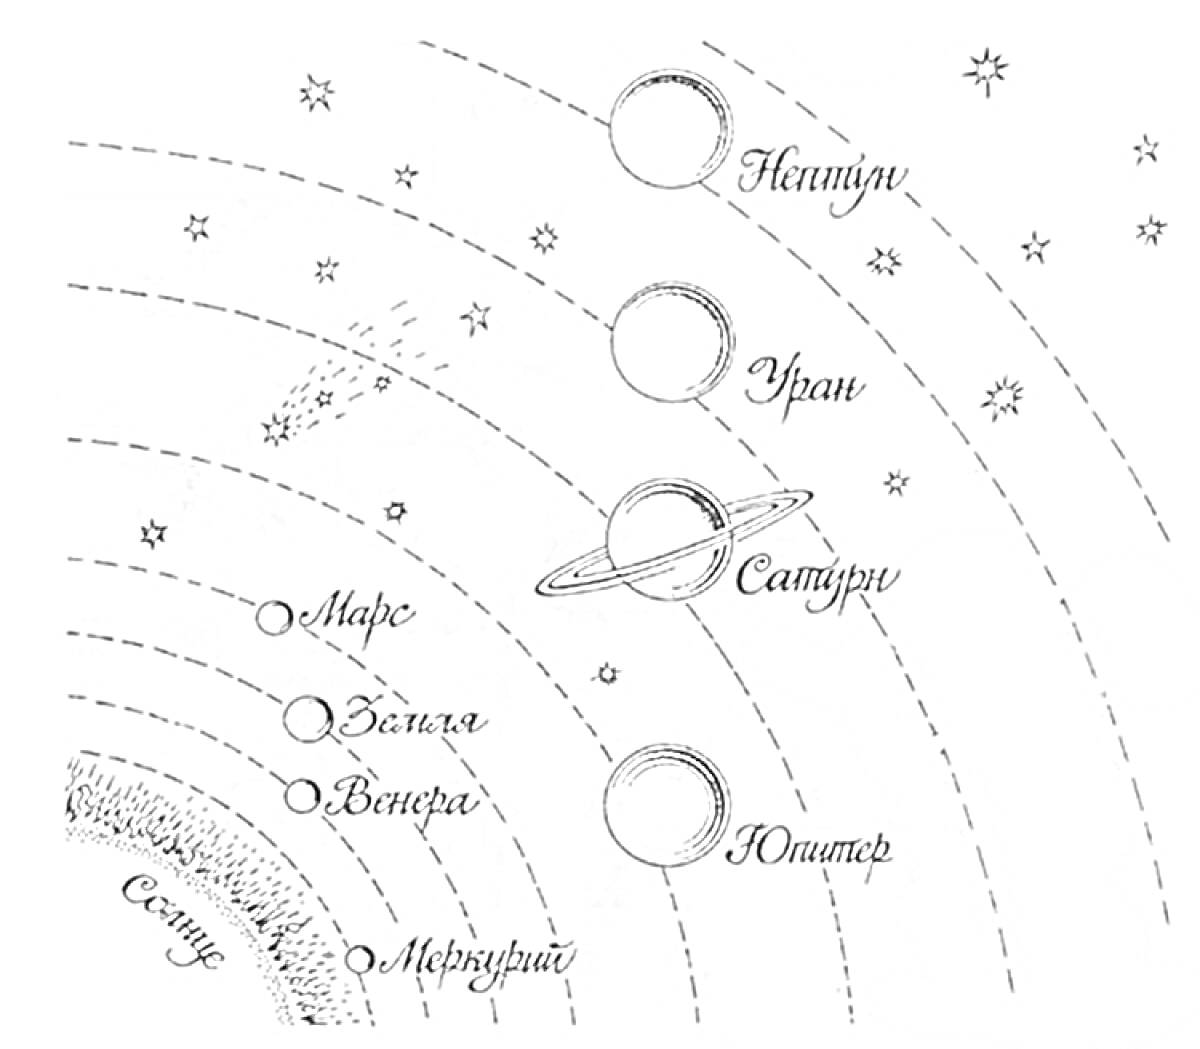 Солнечная система с планетами (Нептун, Уран, Сатурн, Юпитер, Марс, Земля, Венера, Меркурий) и Солнцем